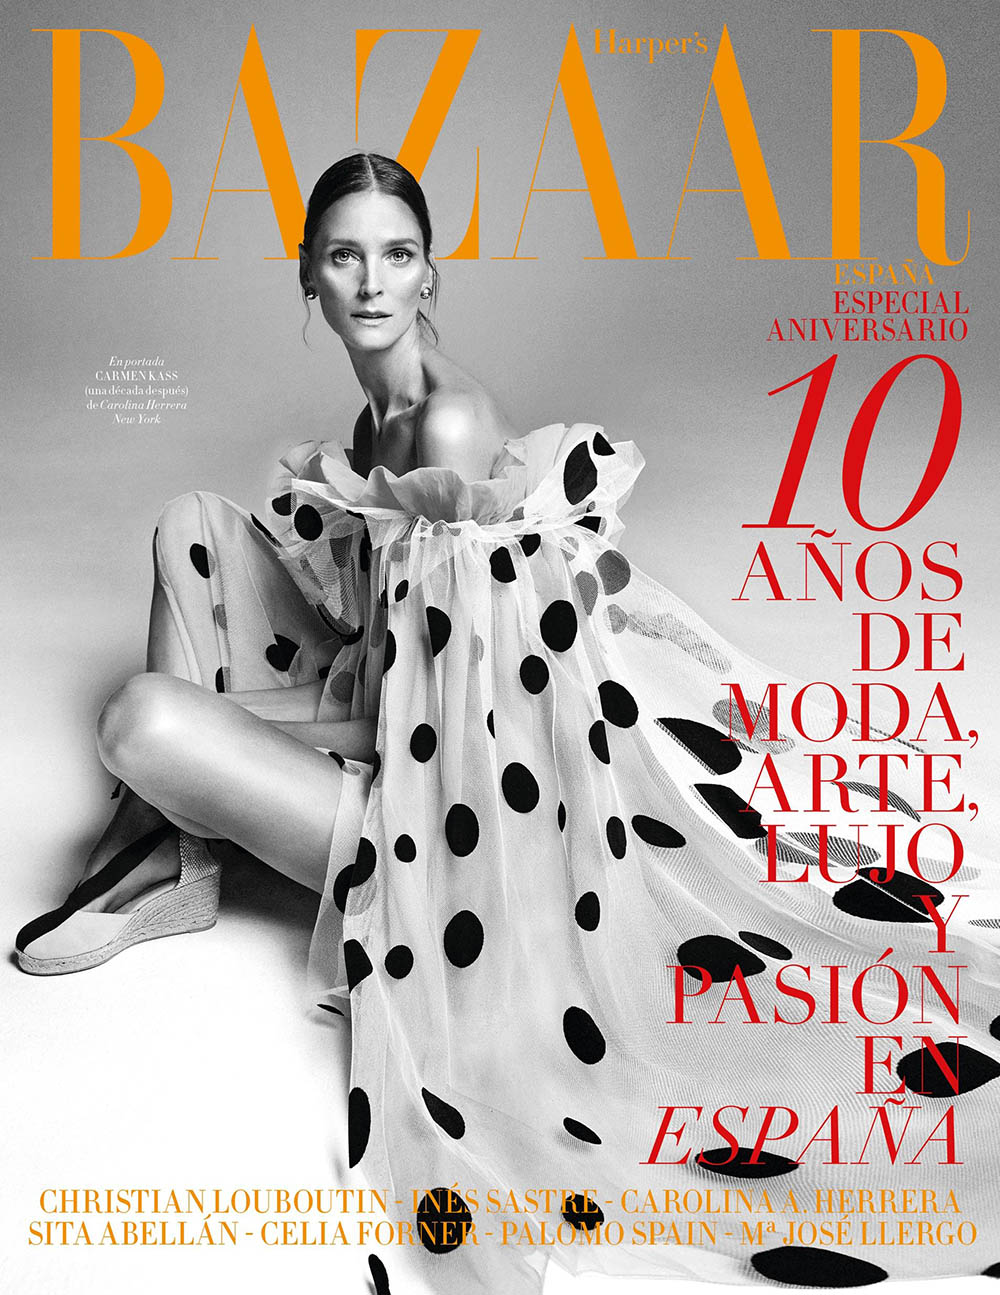 Carmen Kass covers Harper's Bazaar Spain March 2020 by Xavi Gordo -  fashionotography